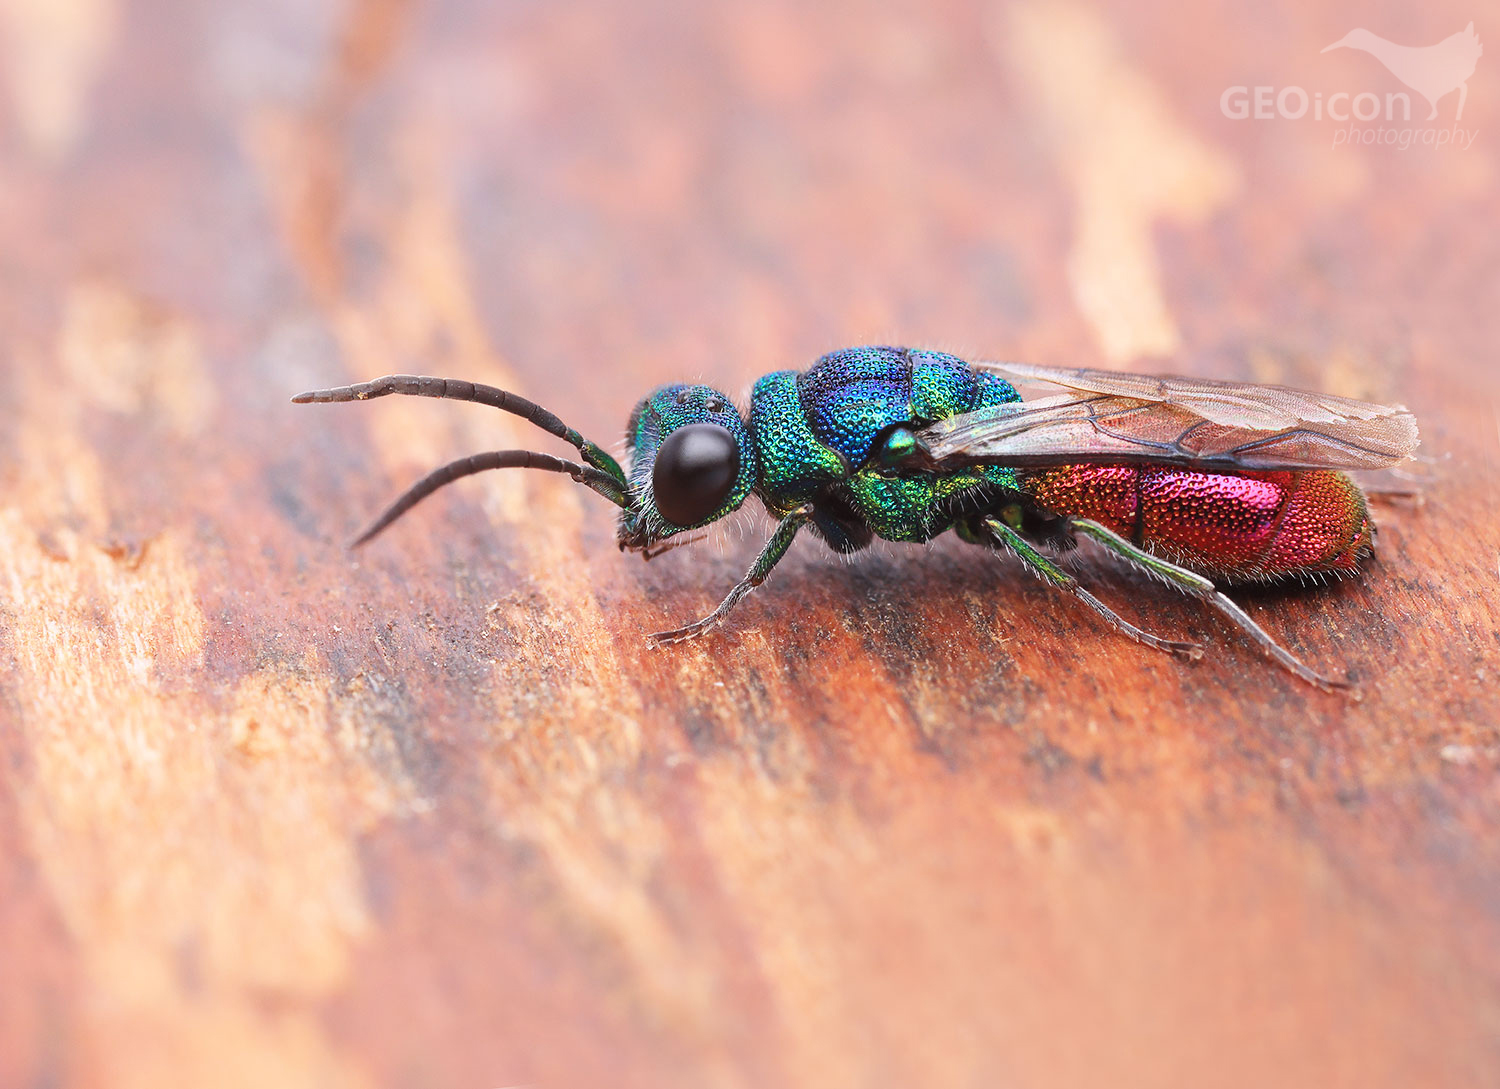 Cuckoo wasp from  the group of Ruby-tailed wasps / ze skupiny zlatěnka ohnivá (Hedychridium chloropygum)